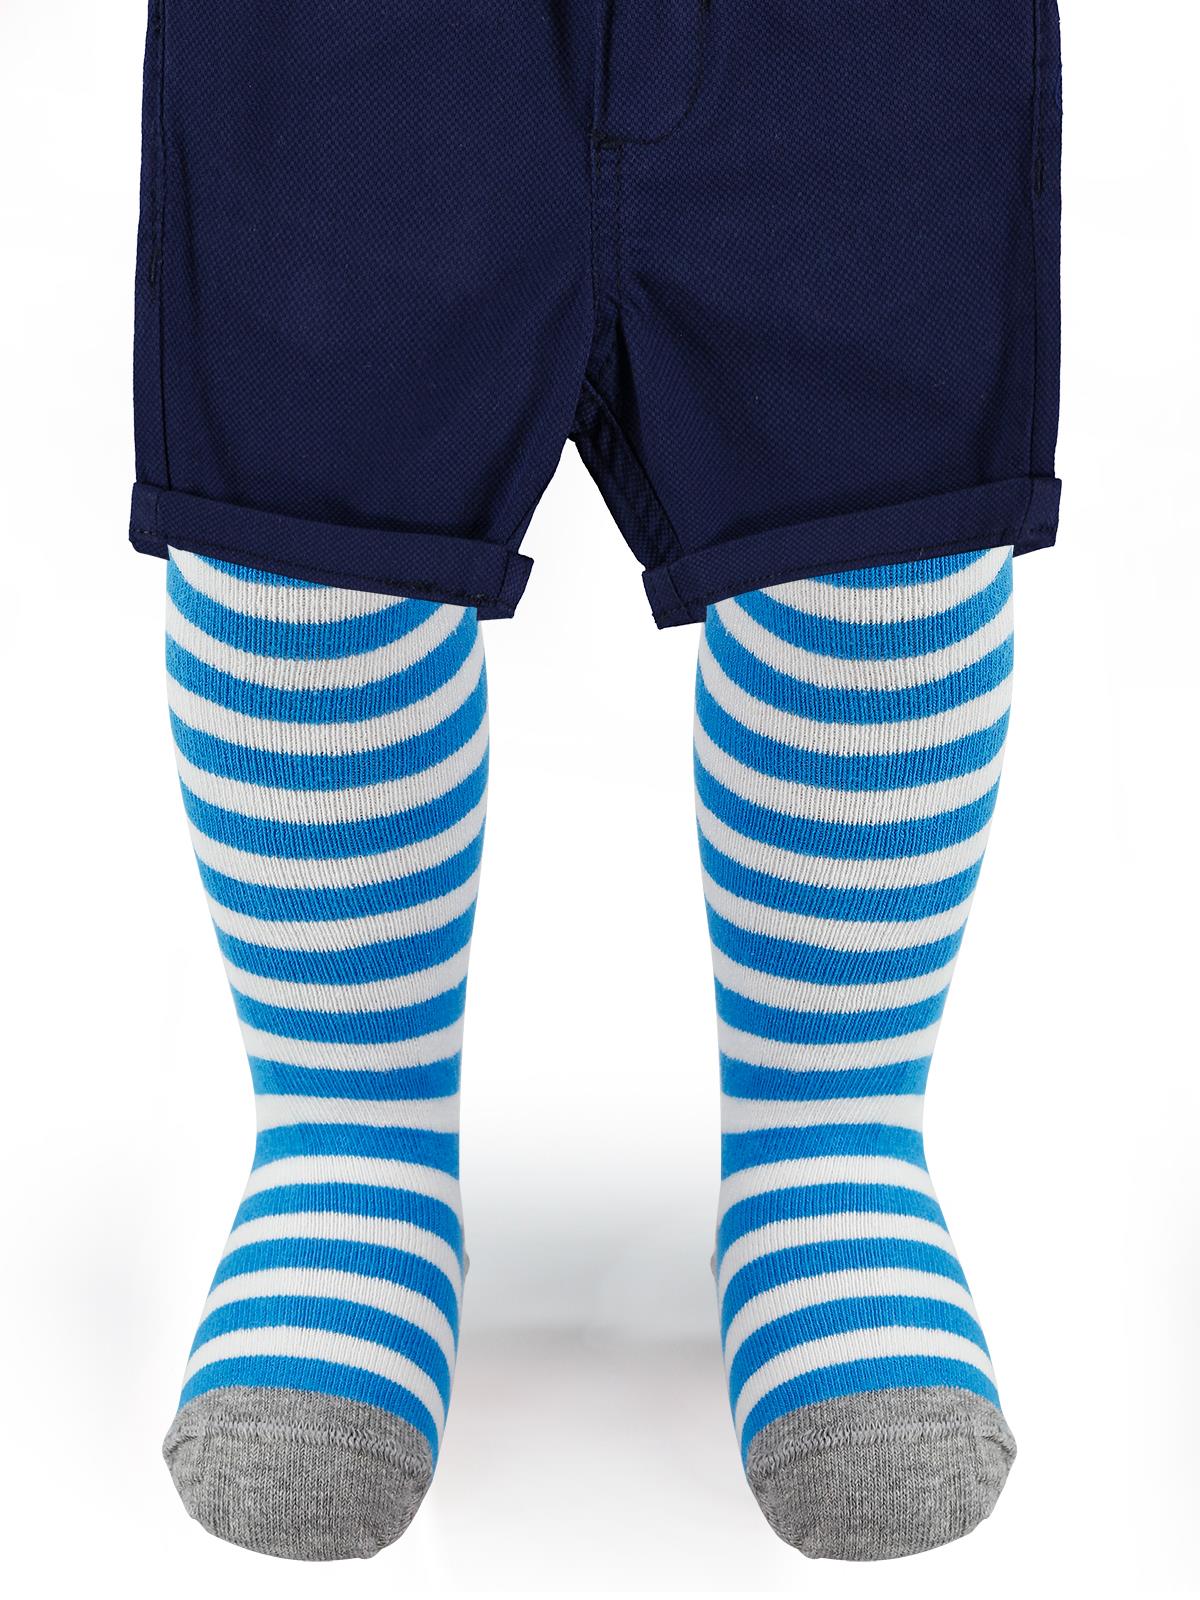 Civil Baby Erkek Bebek Külotlu Çorap 0-12 Ay Kırmızı